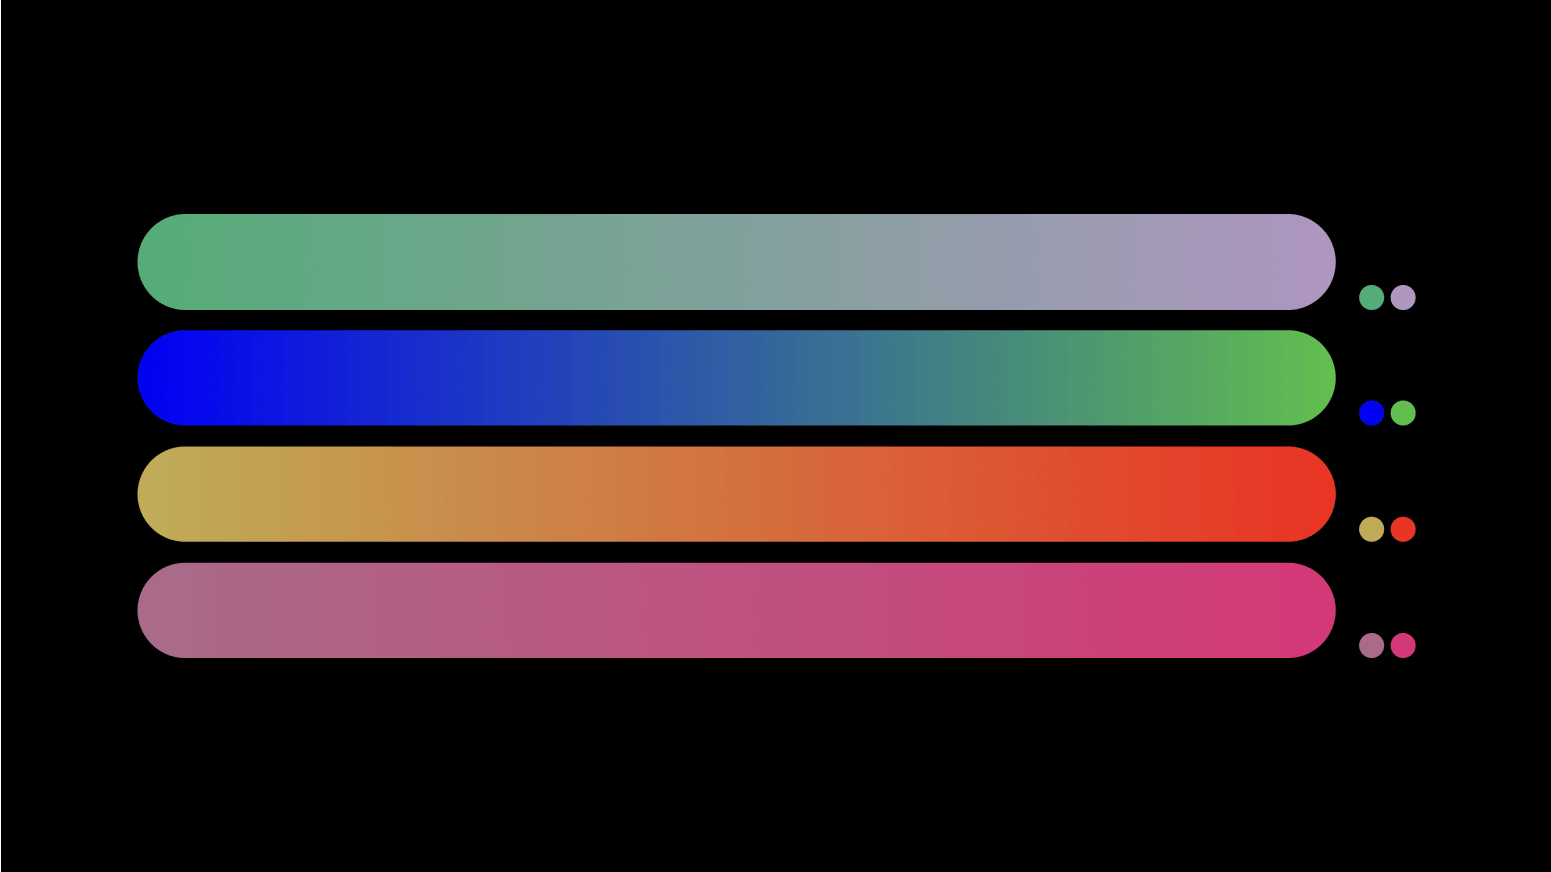 Two color gradients